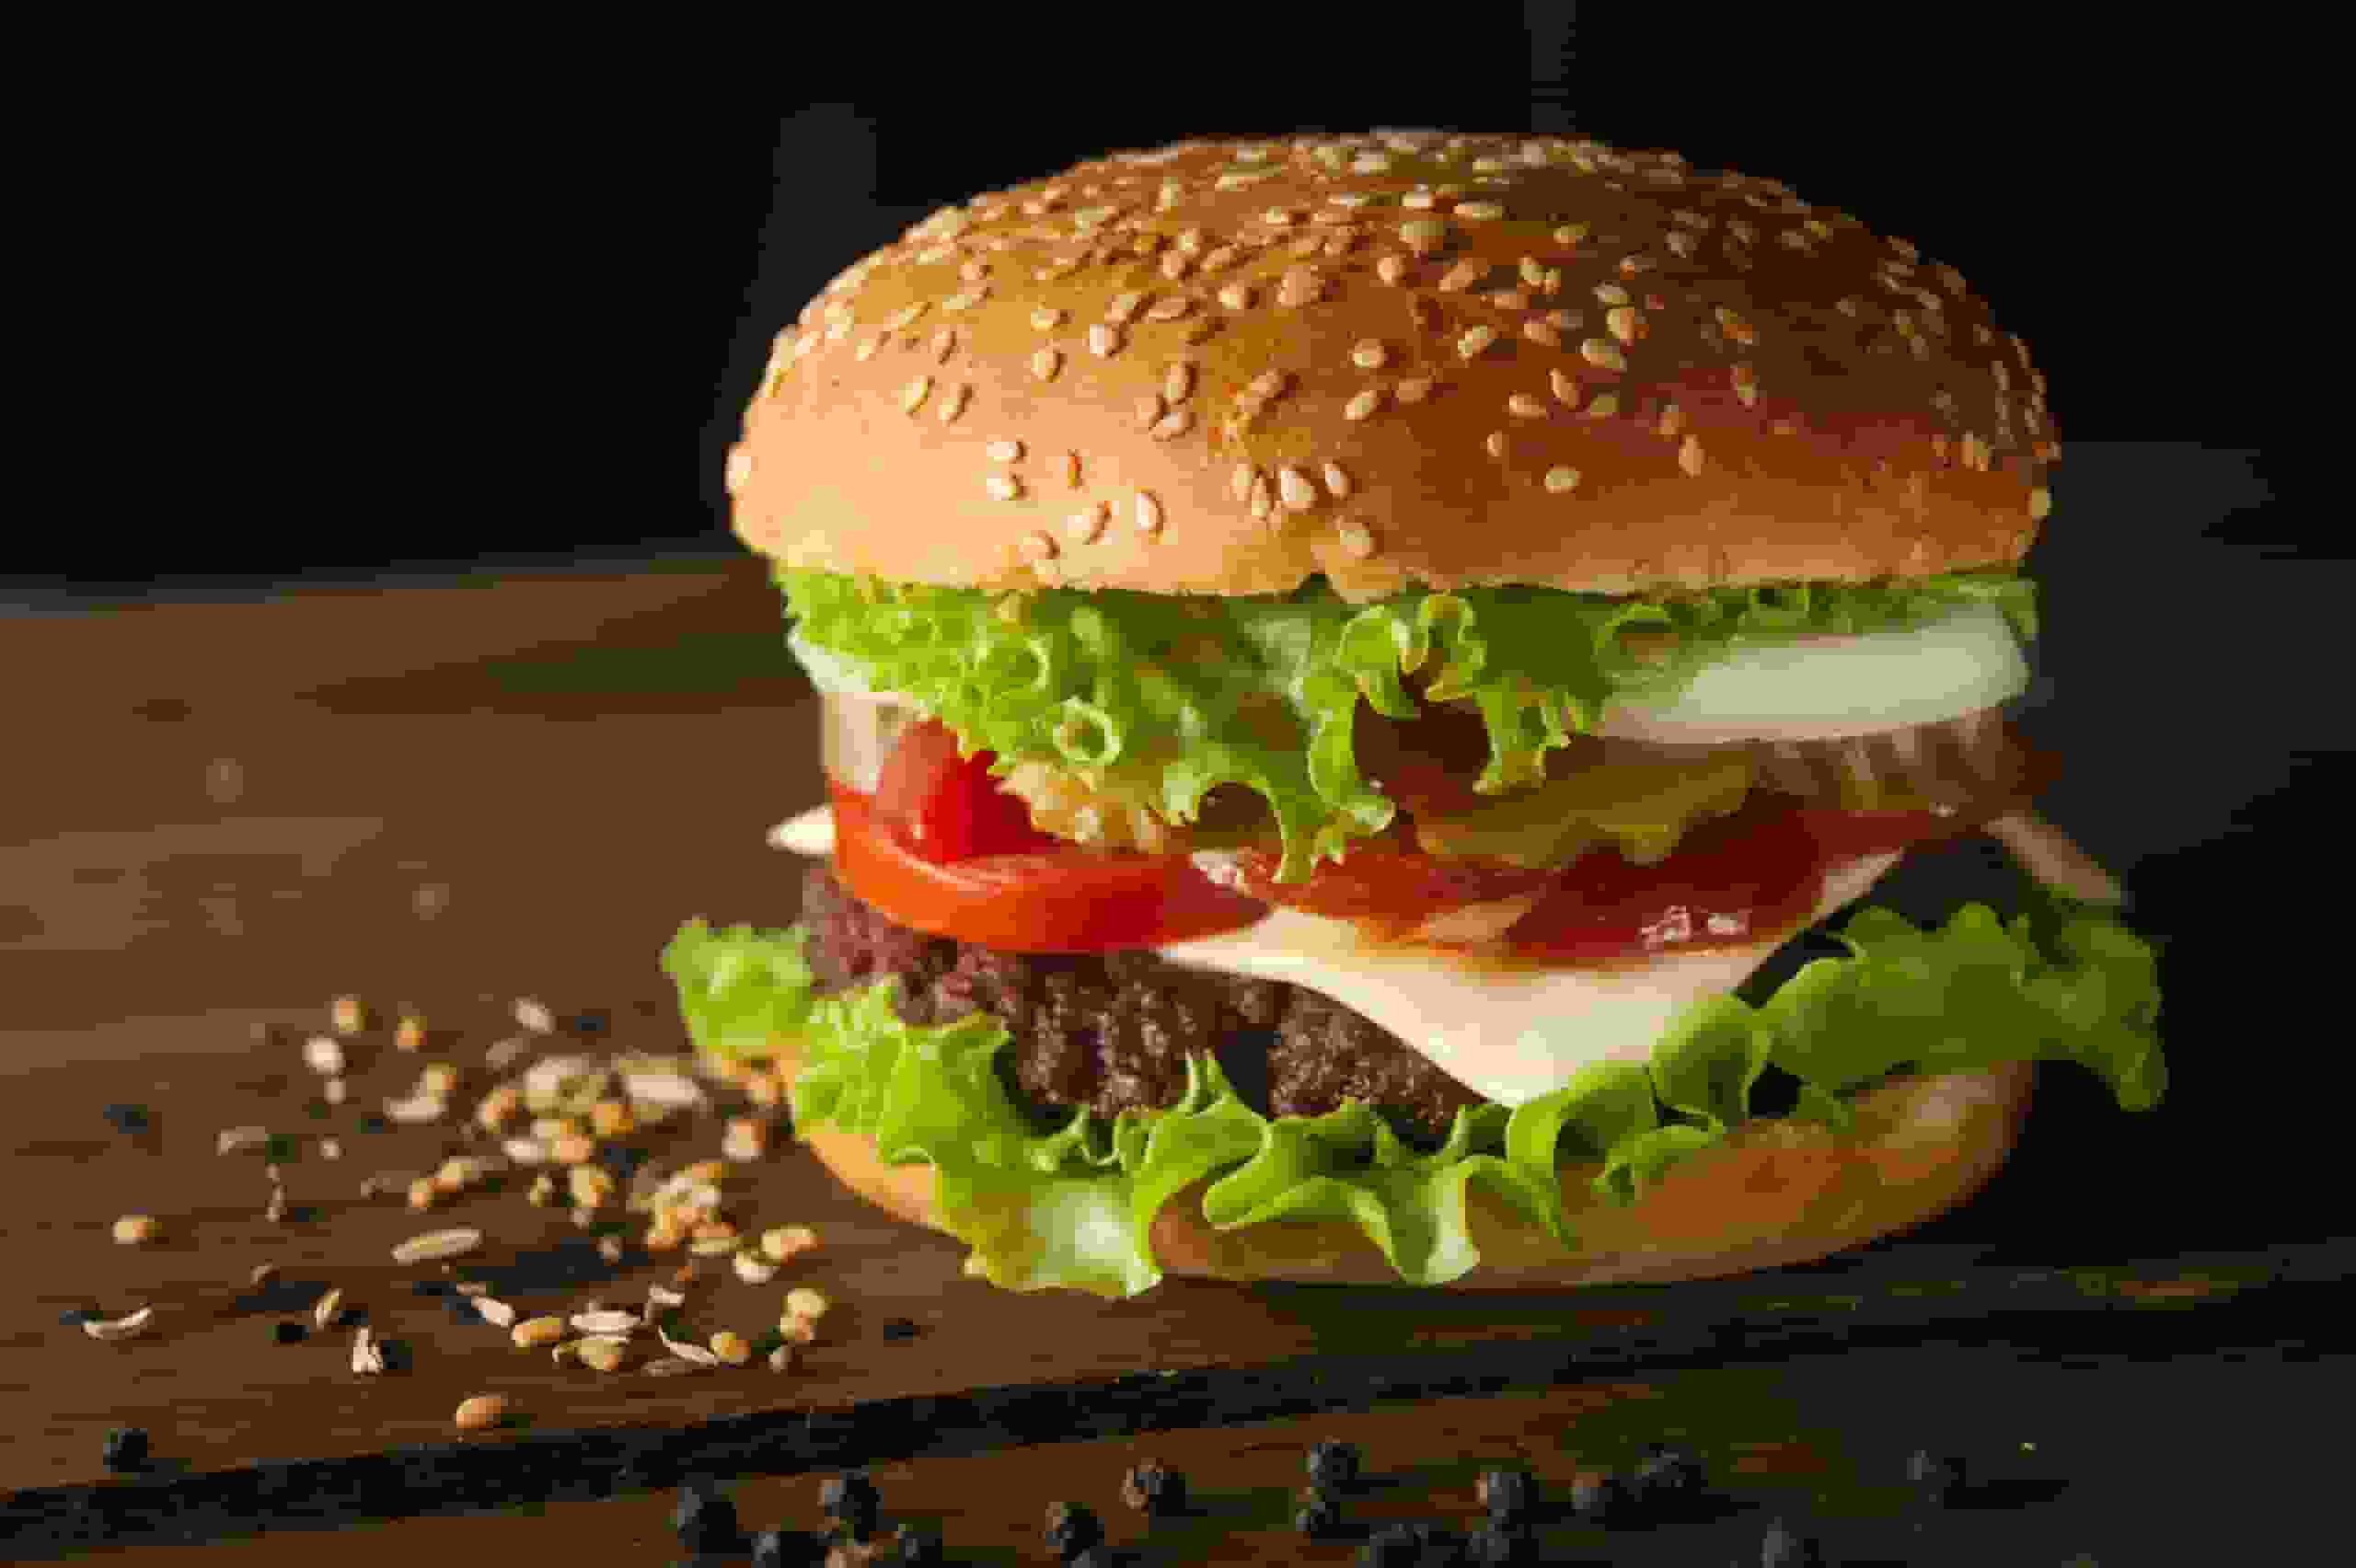 Business-Burger King-Inflation-Bankruptcy-US News